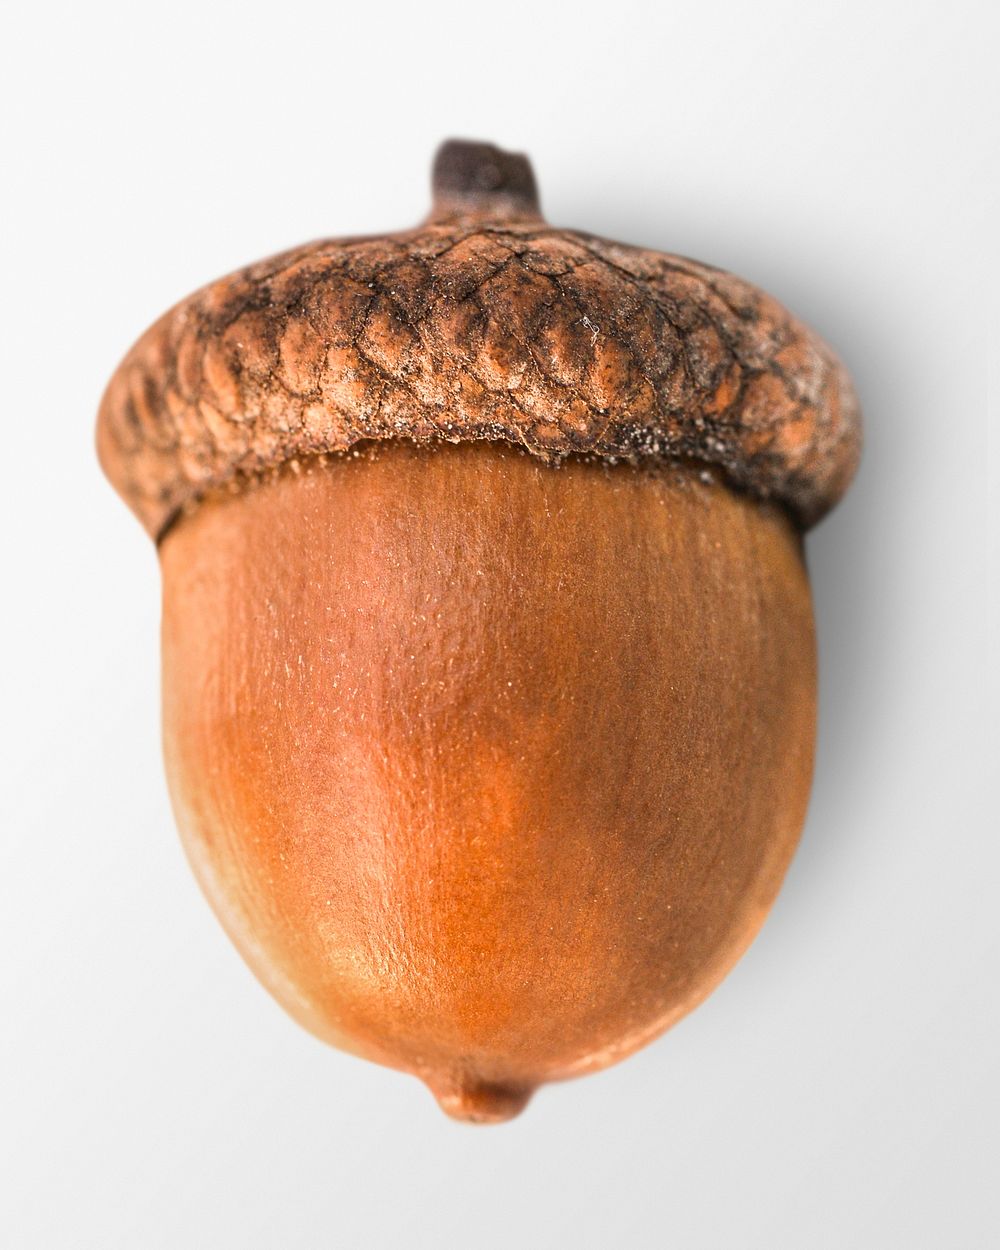 Acorn clipart, brown oaknut psd